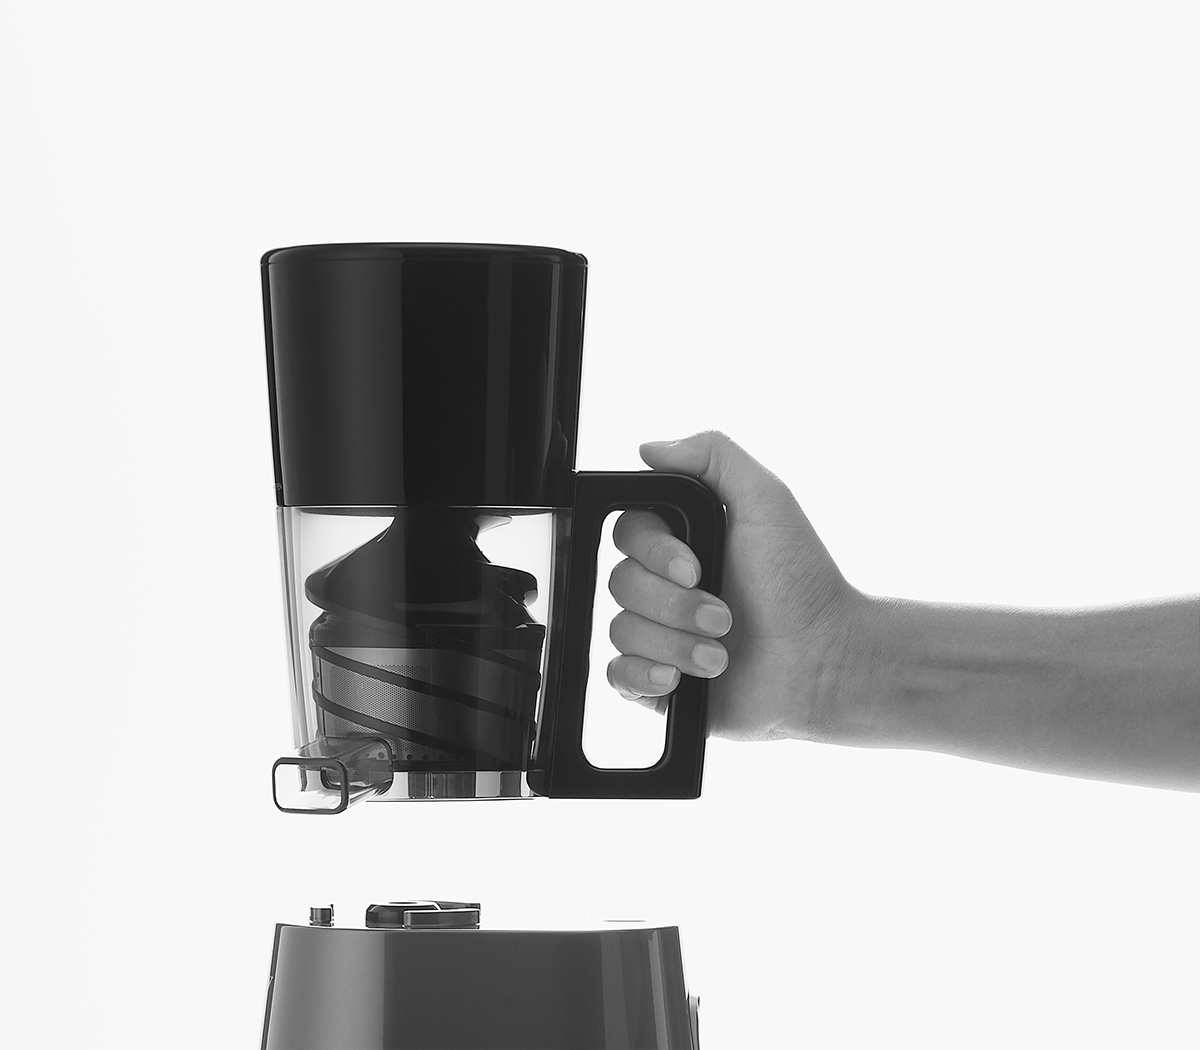 Adobe Portfolio Juicer Juicepresso slow juicer CJP-03 Coway if design  Red Dot juice maker idea design 김대후 김대후 디자이너 Dae-hoo Kim Daehoo Kim Behance